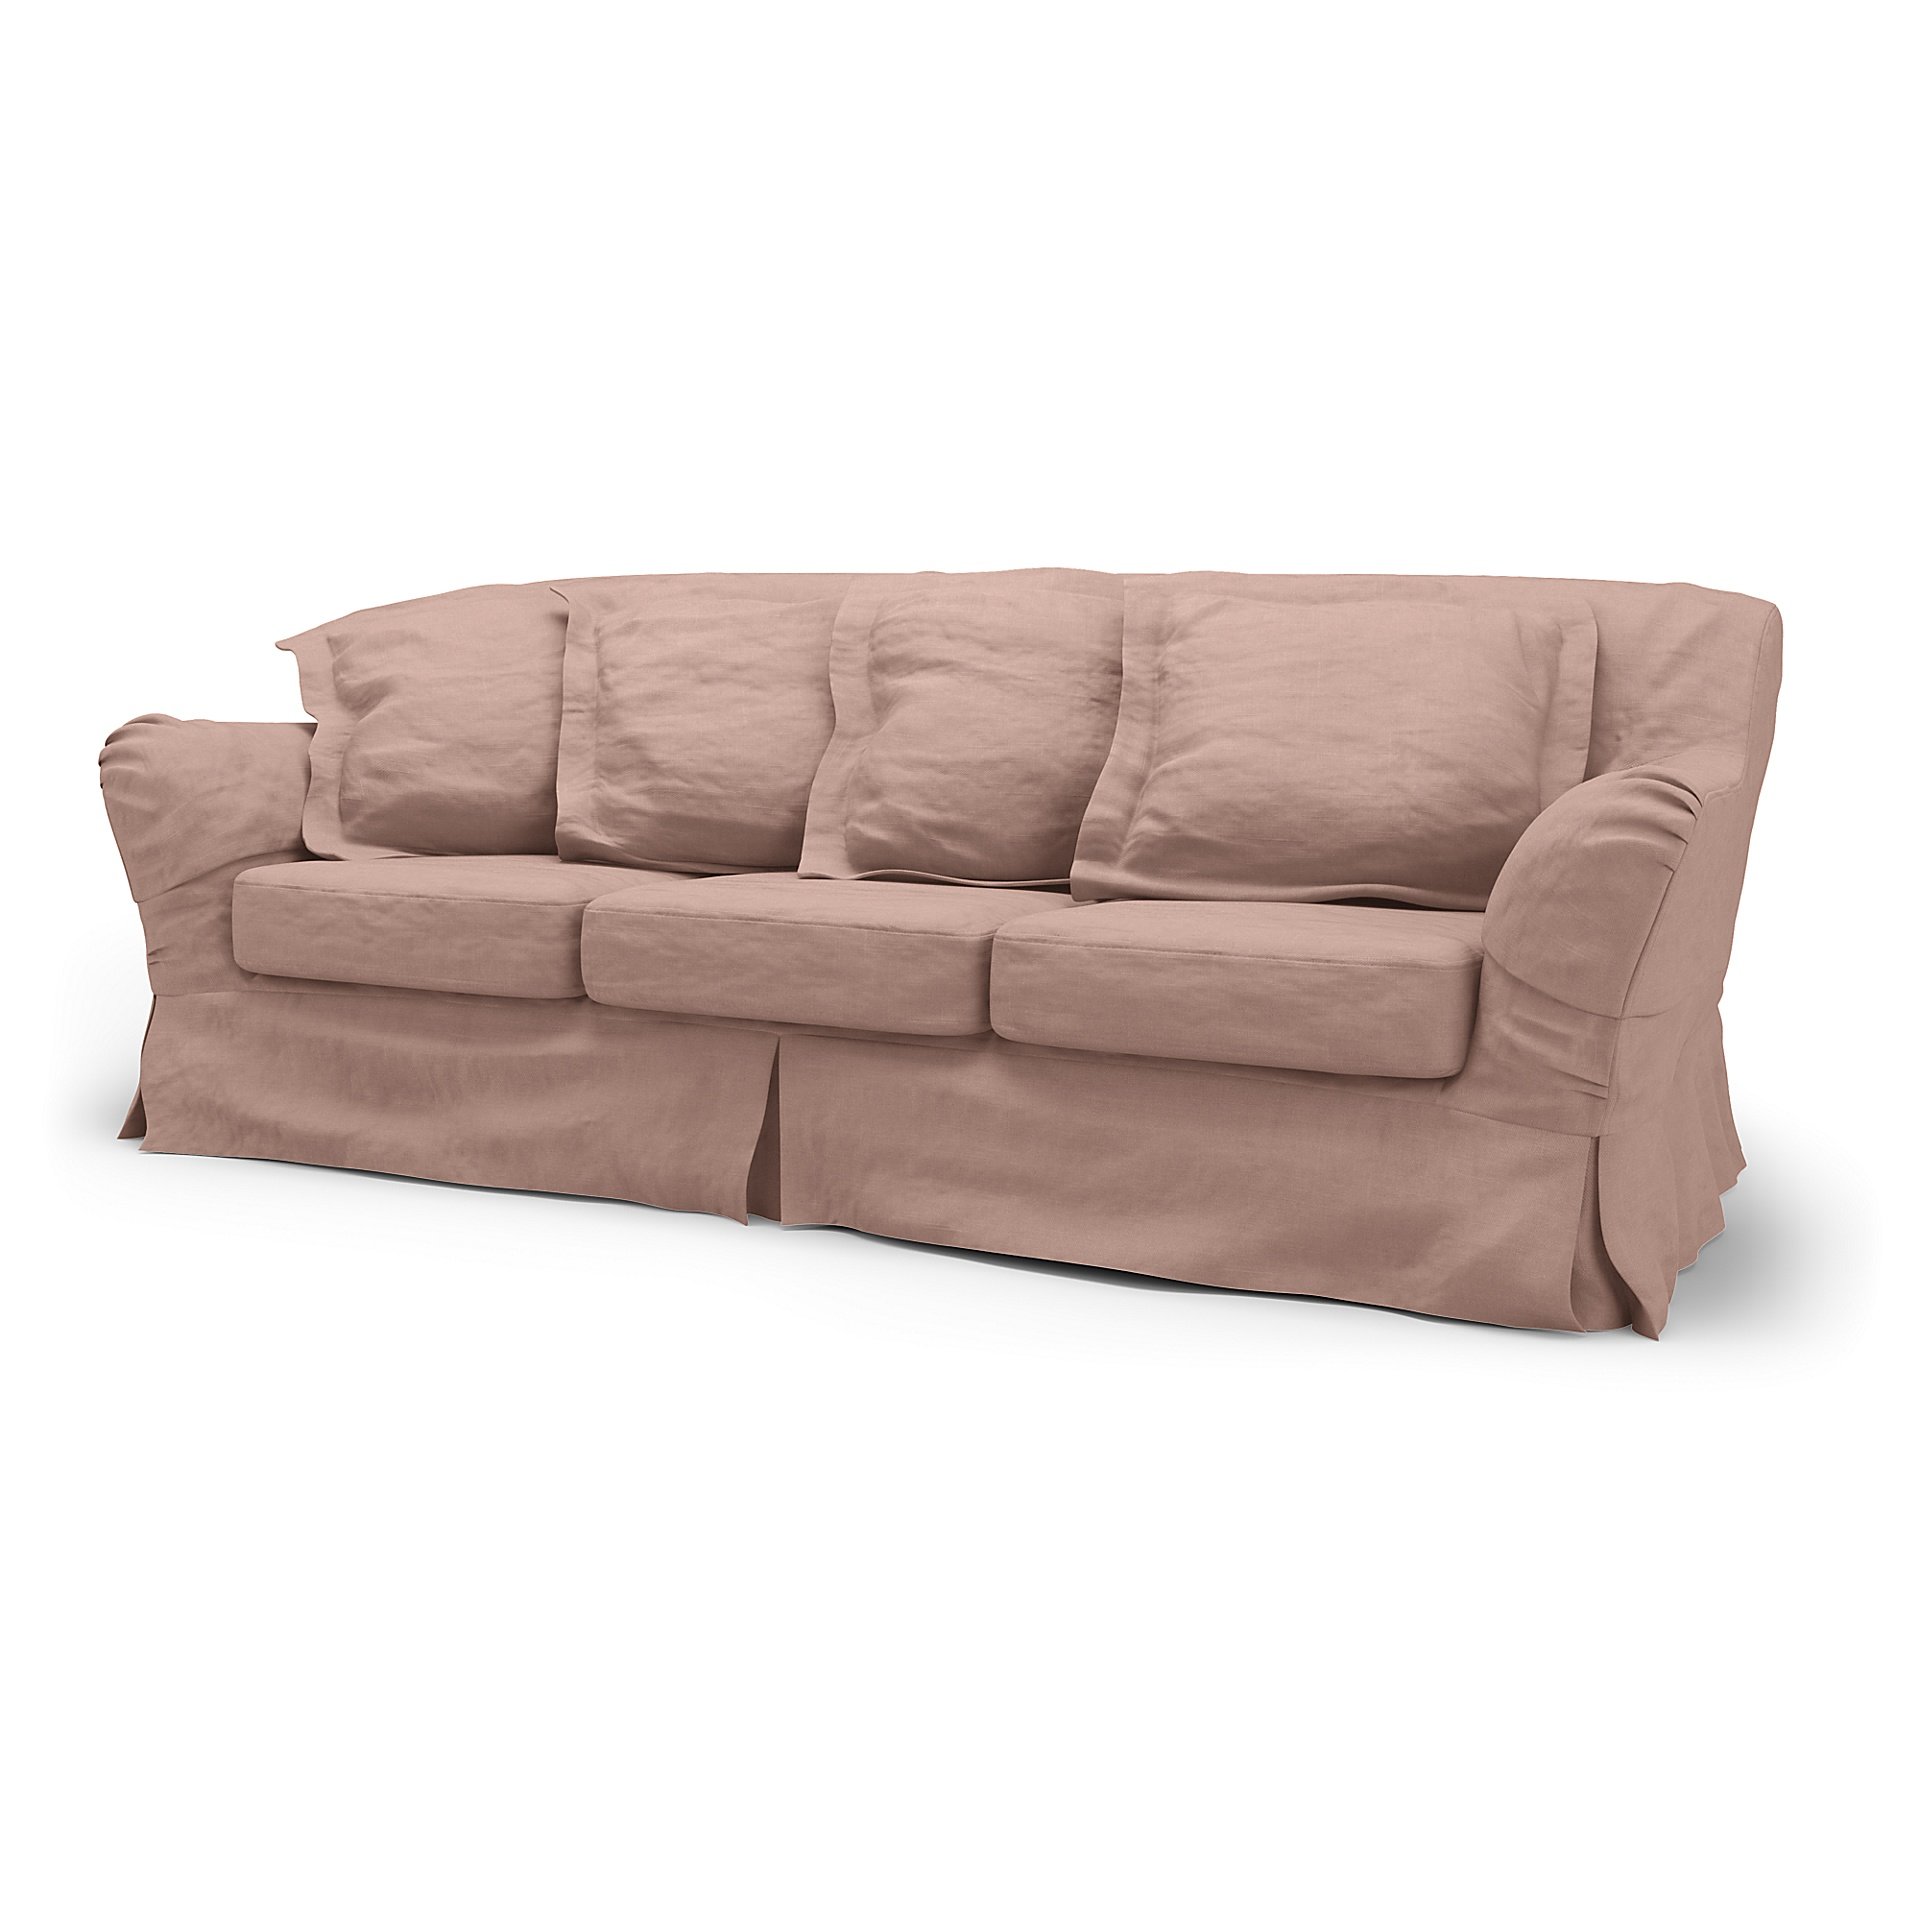 IKEA - Tomelilla 3 Seater Sofa Cover, Blush, Linen - Bemz